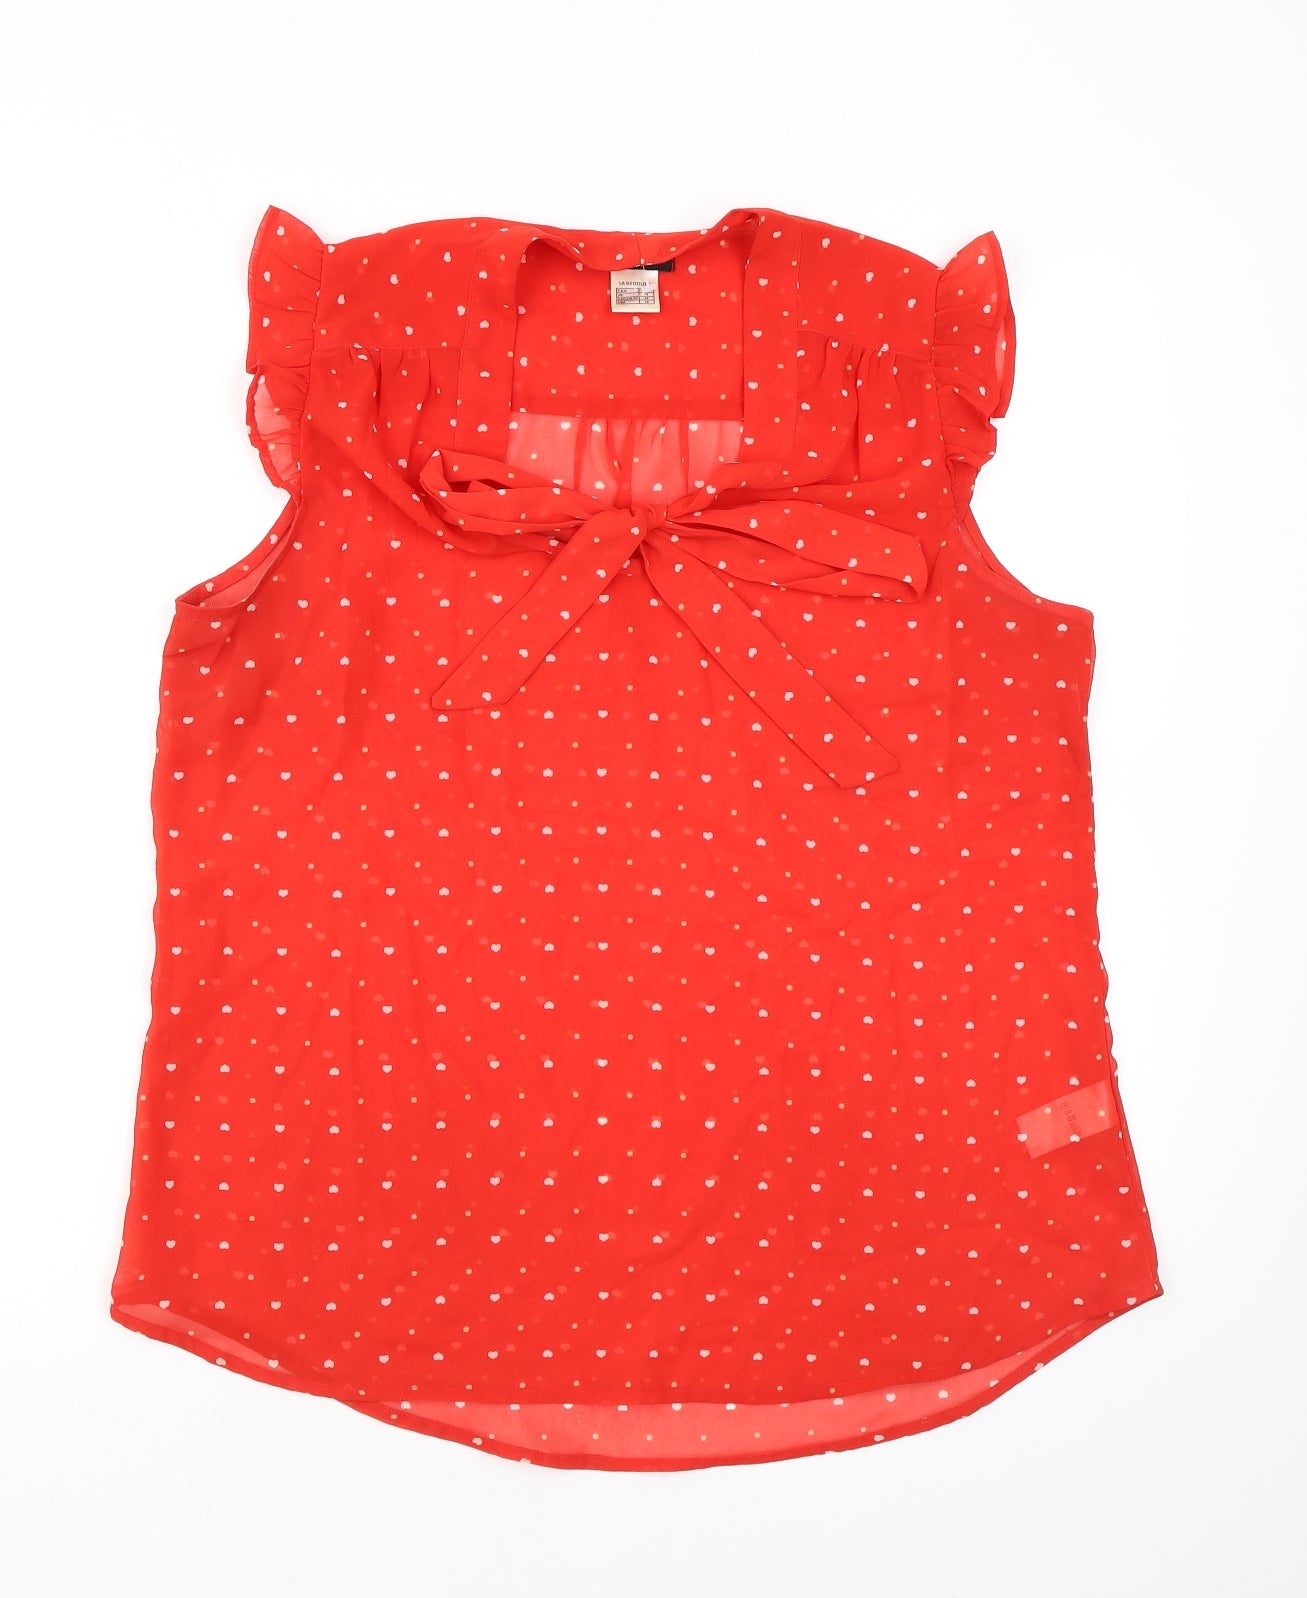 La Redoute Womens Red Polka Dot Polyester Basic Blouse Size 16 V-Neck - Hearts Sheer